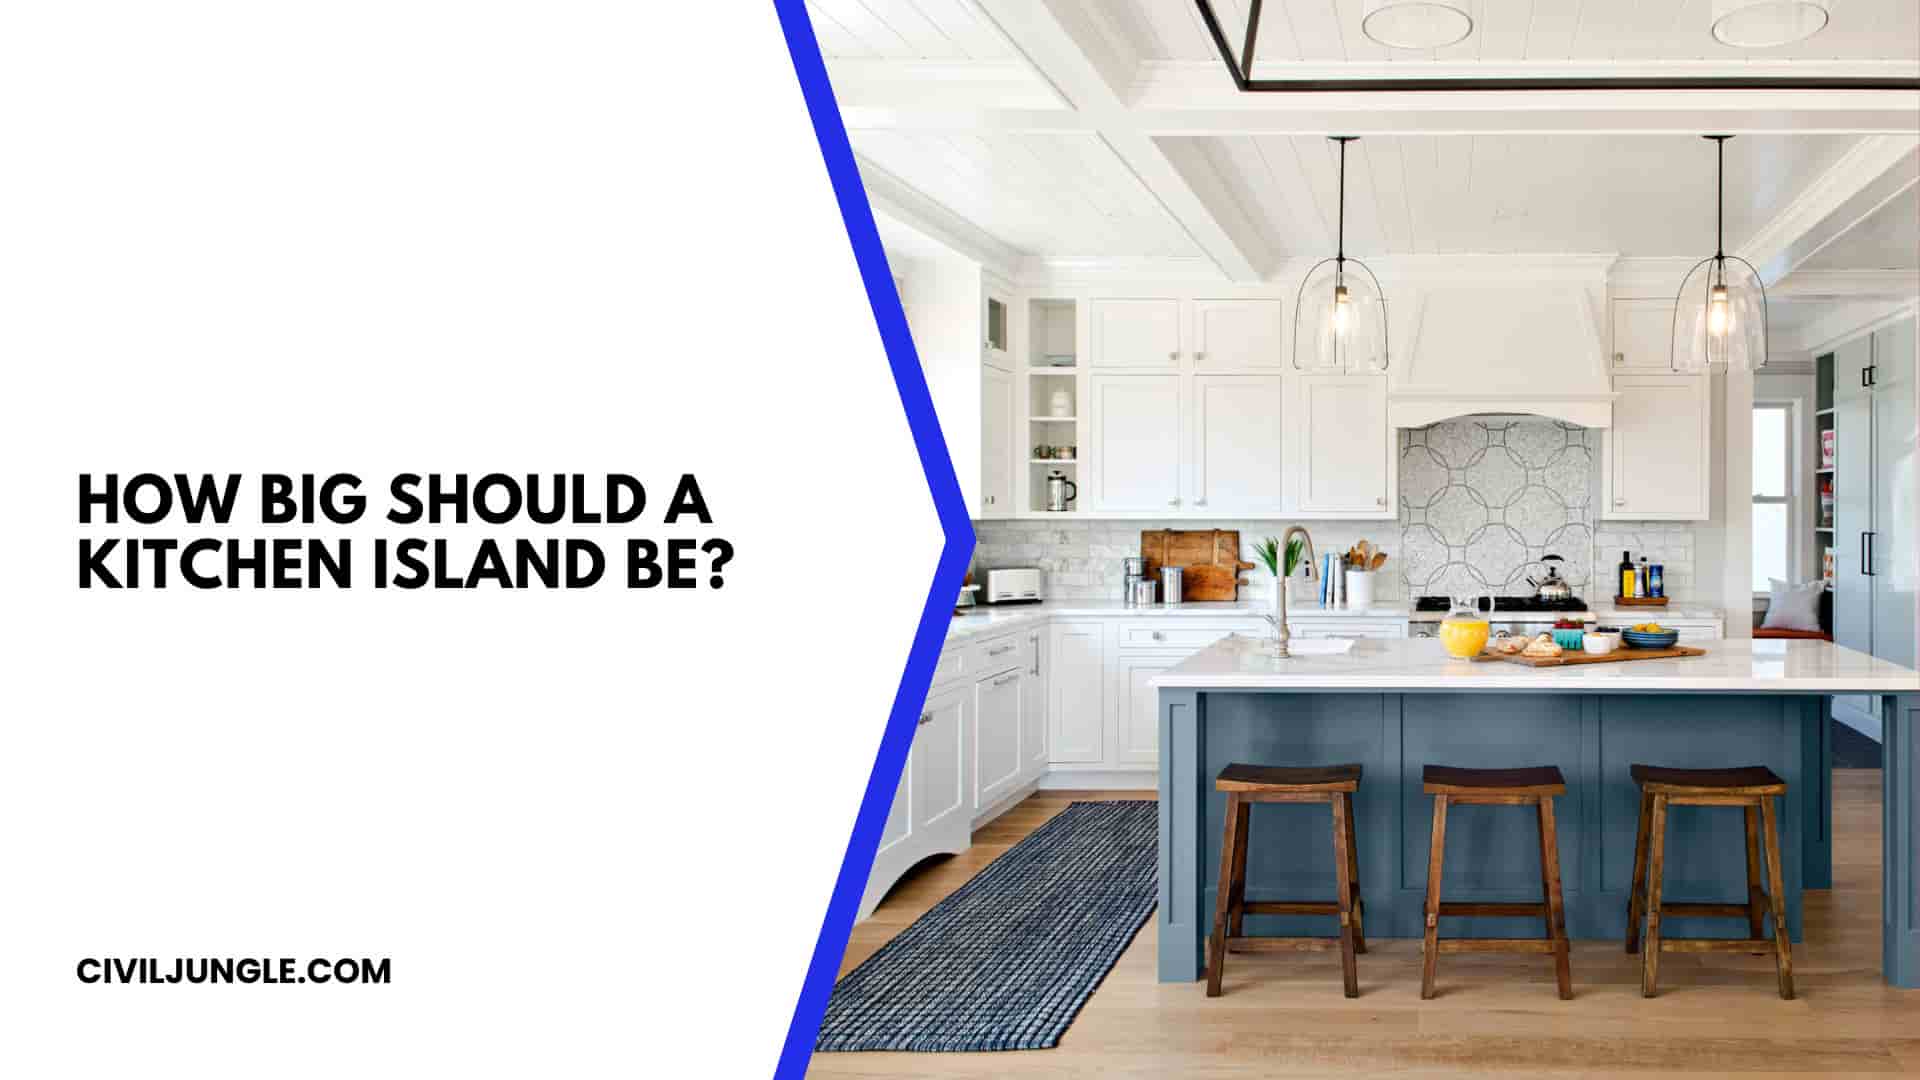 How Big Should a Kitchen Island Be?